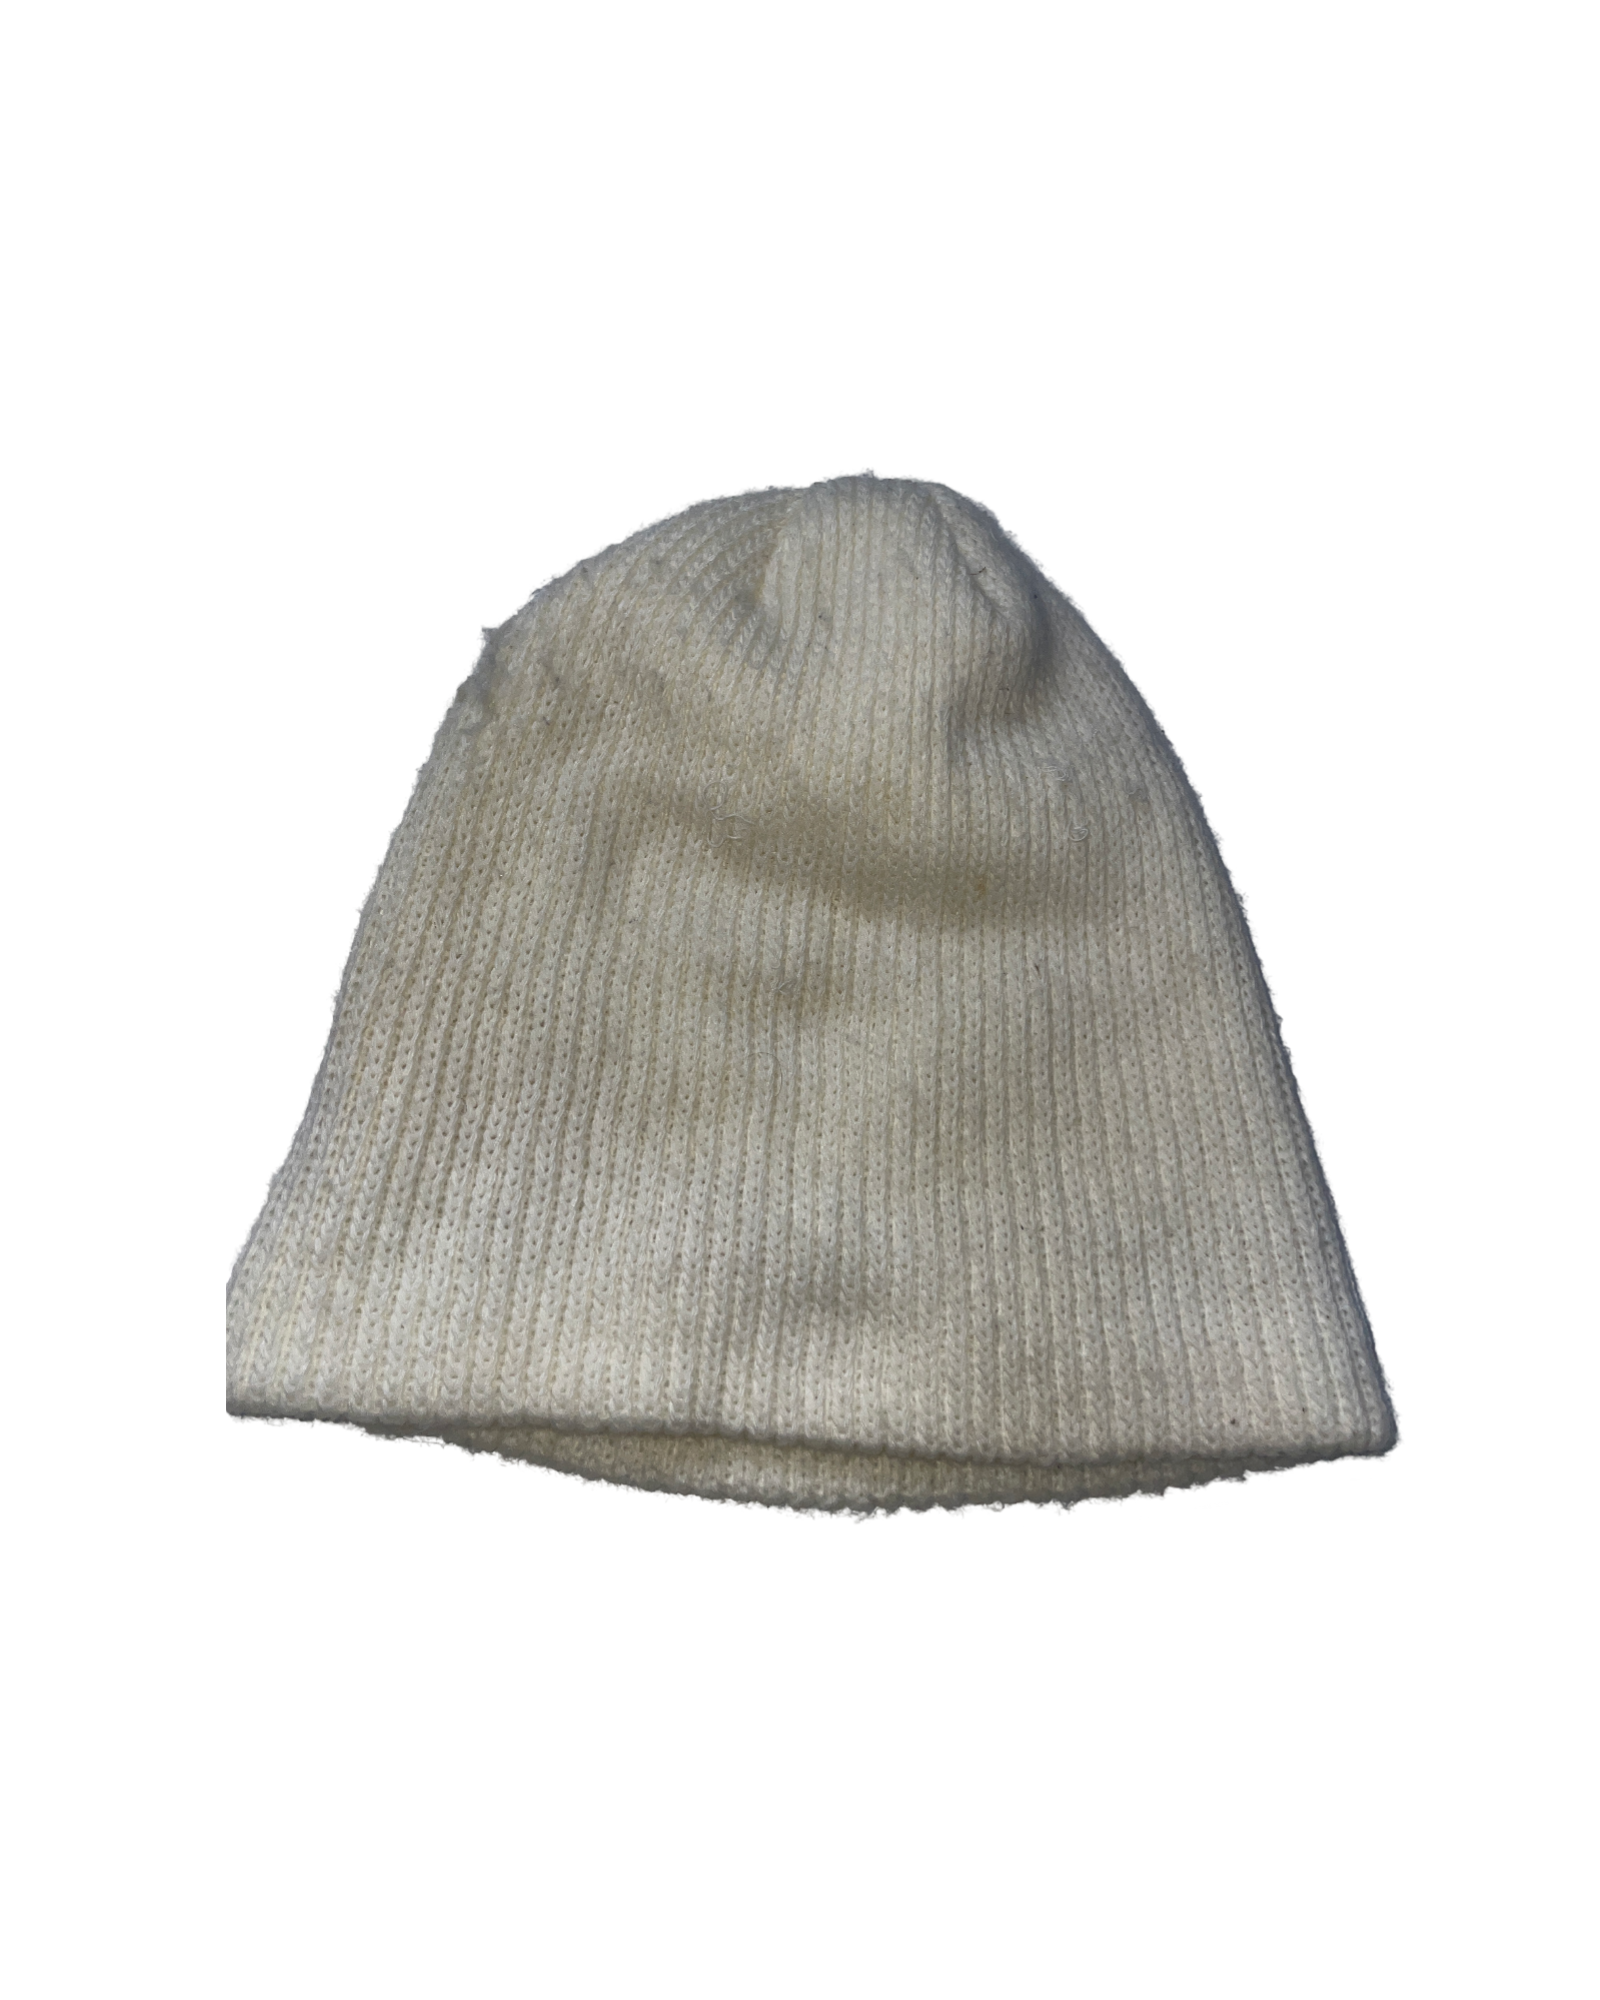 Vans Beanie Hats Winter Knitted Cap Soft Warm Ski Hat Autumn Winter Skullies Warm Casual Hats  Cap SKU 5091